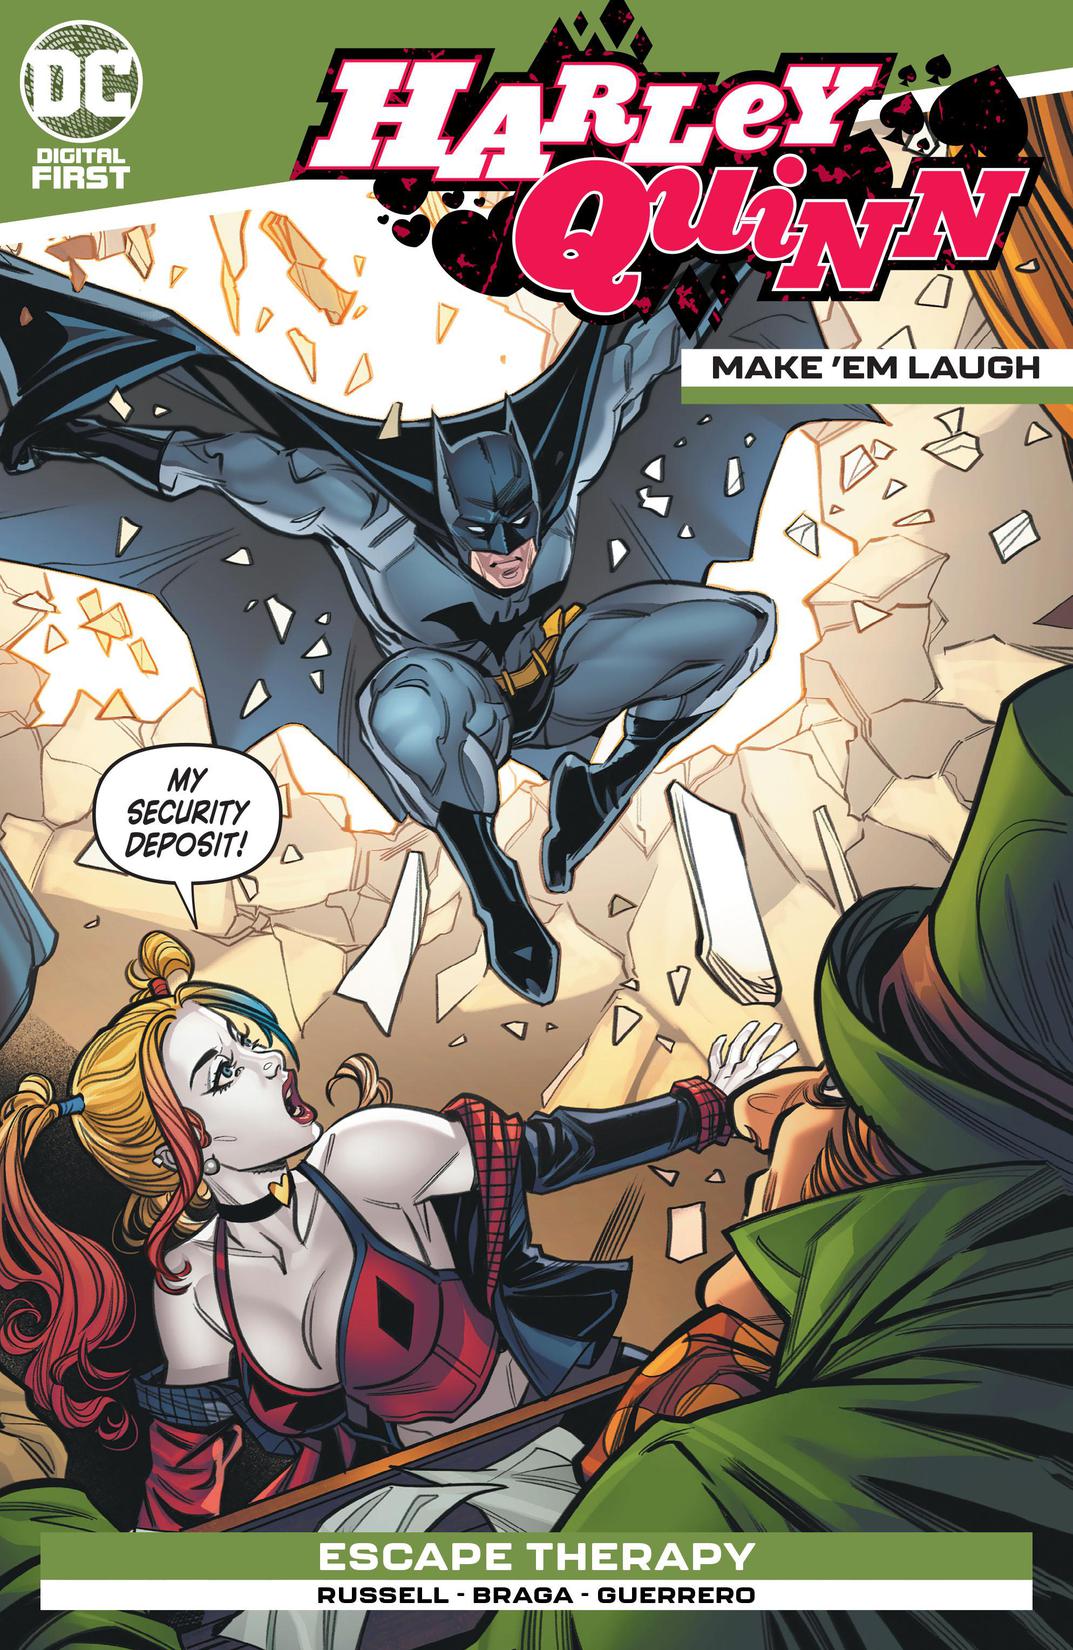 Harley Quinn: Make 'em Laugh #3 preview images